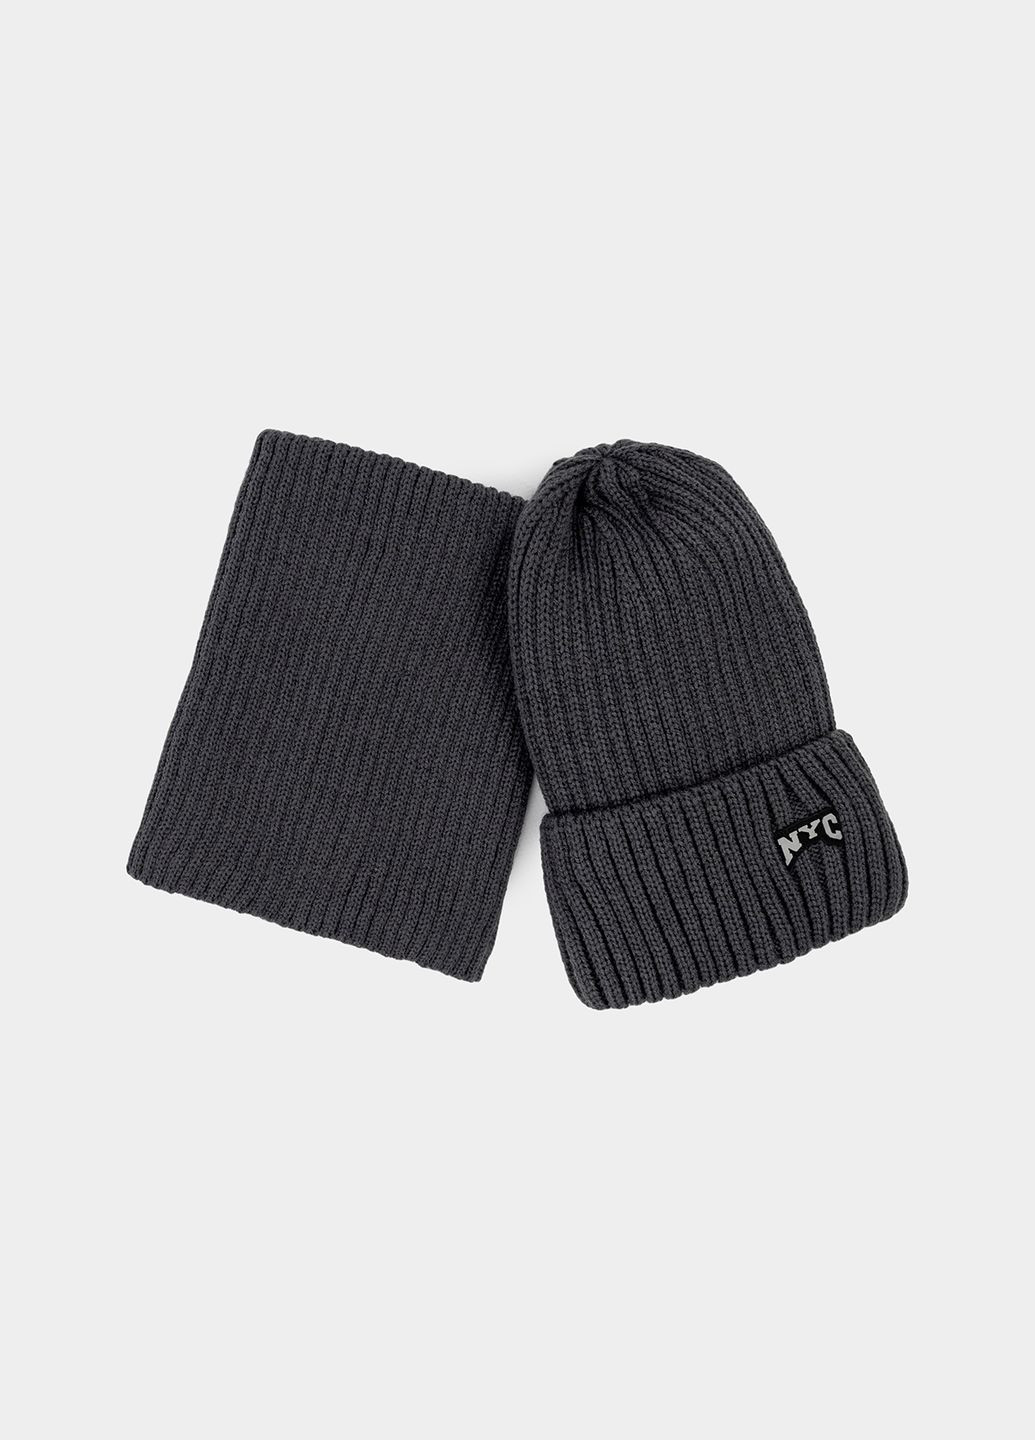 Комплект шапка и снуд для мальчика цвет темно-серый ЦБ-00234134 Yuki (268734763)